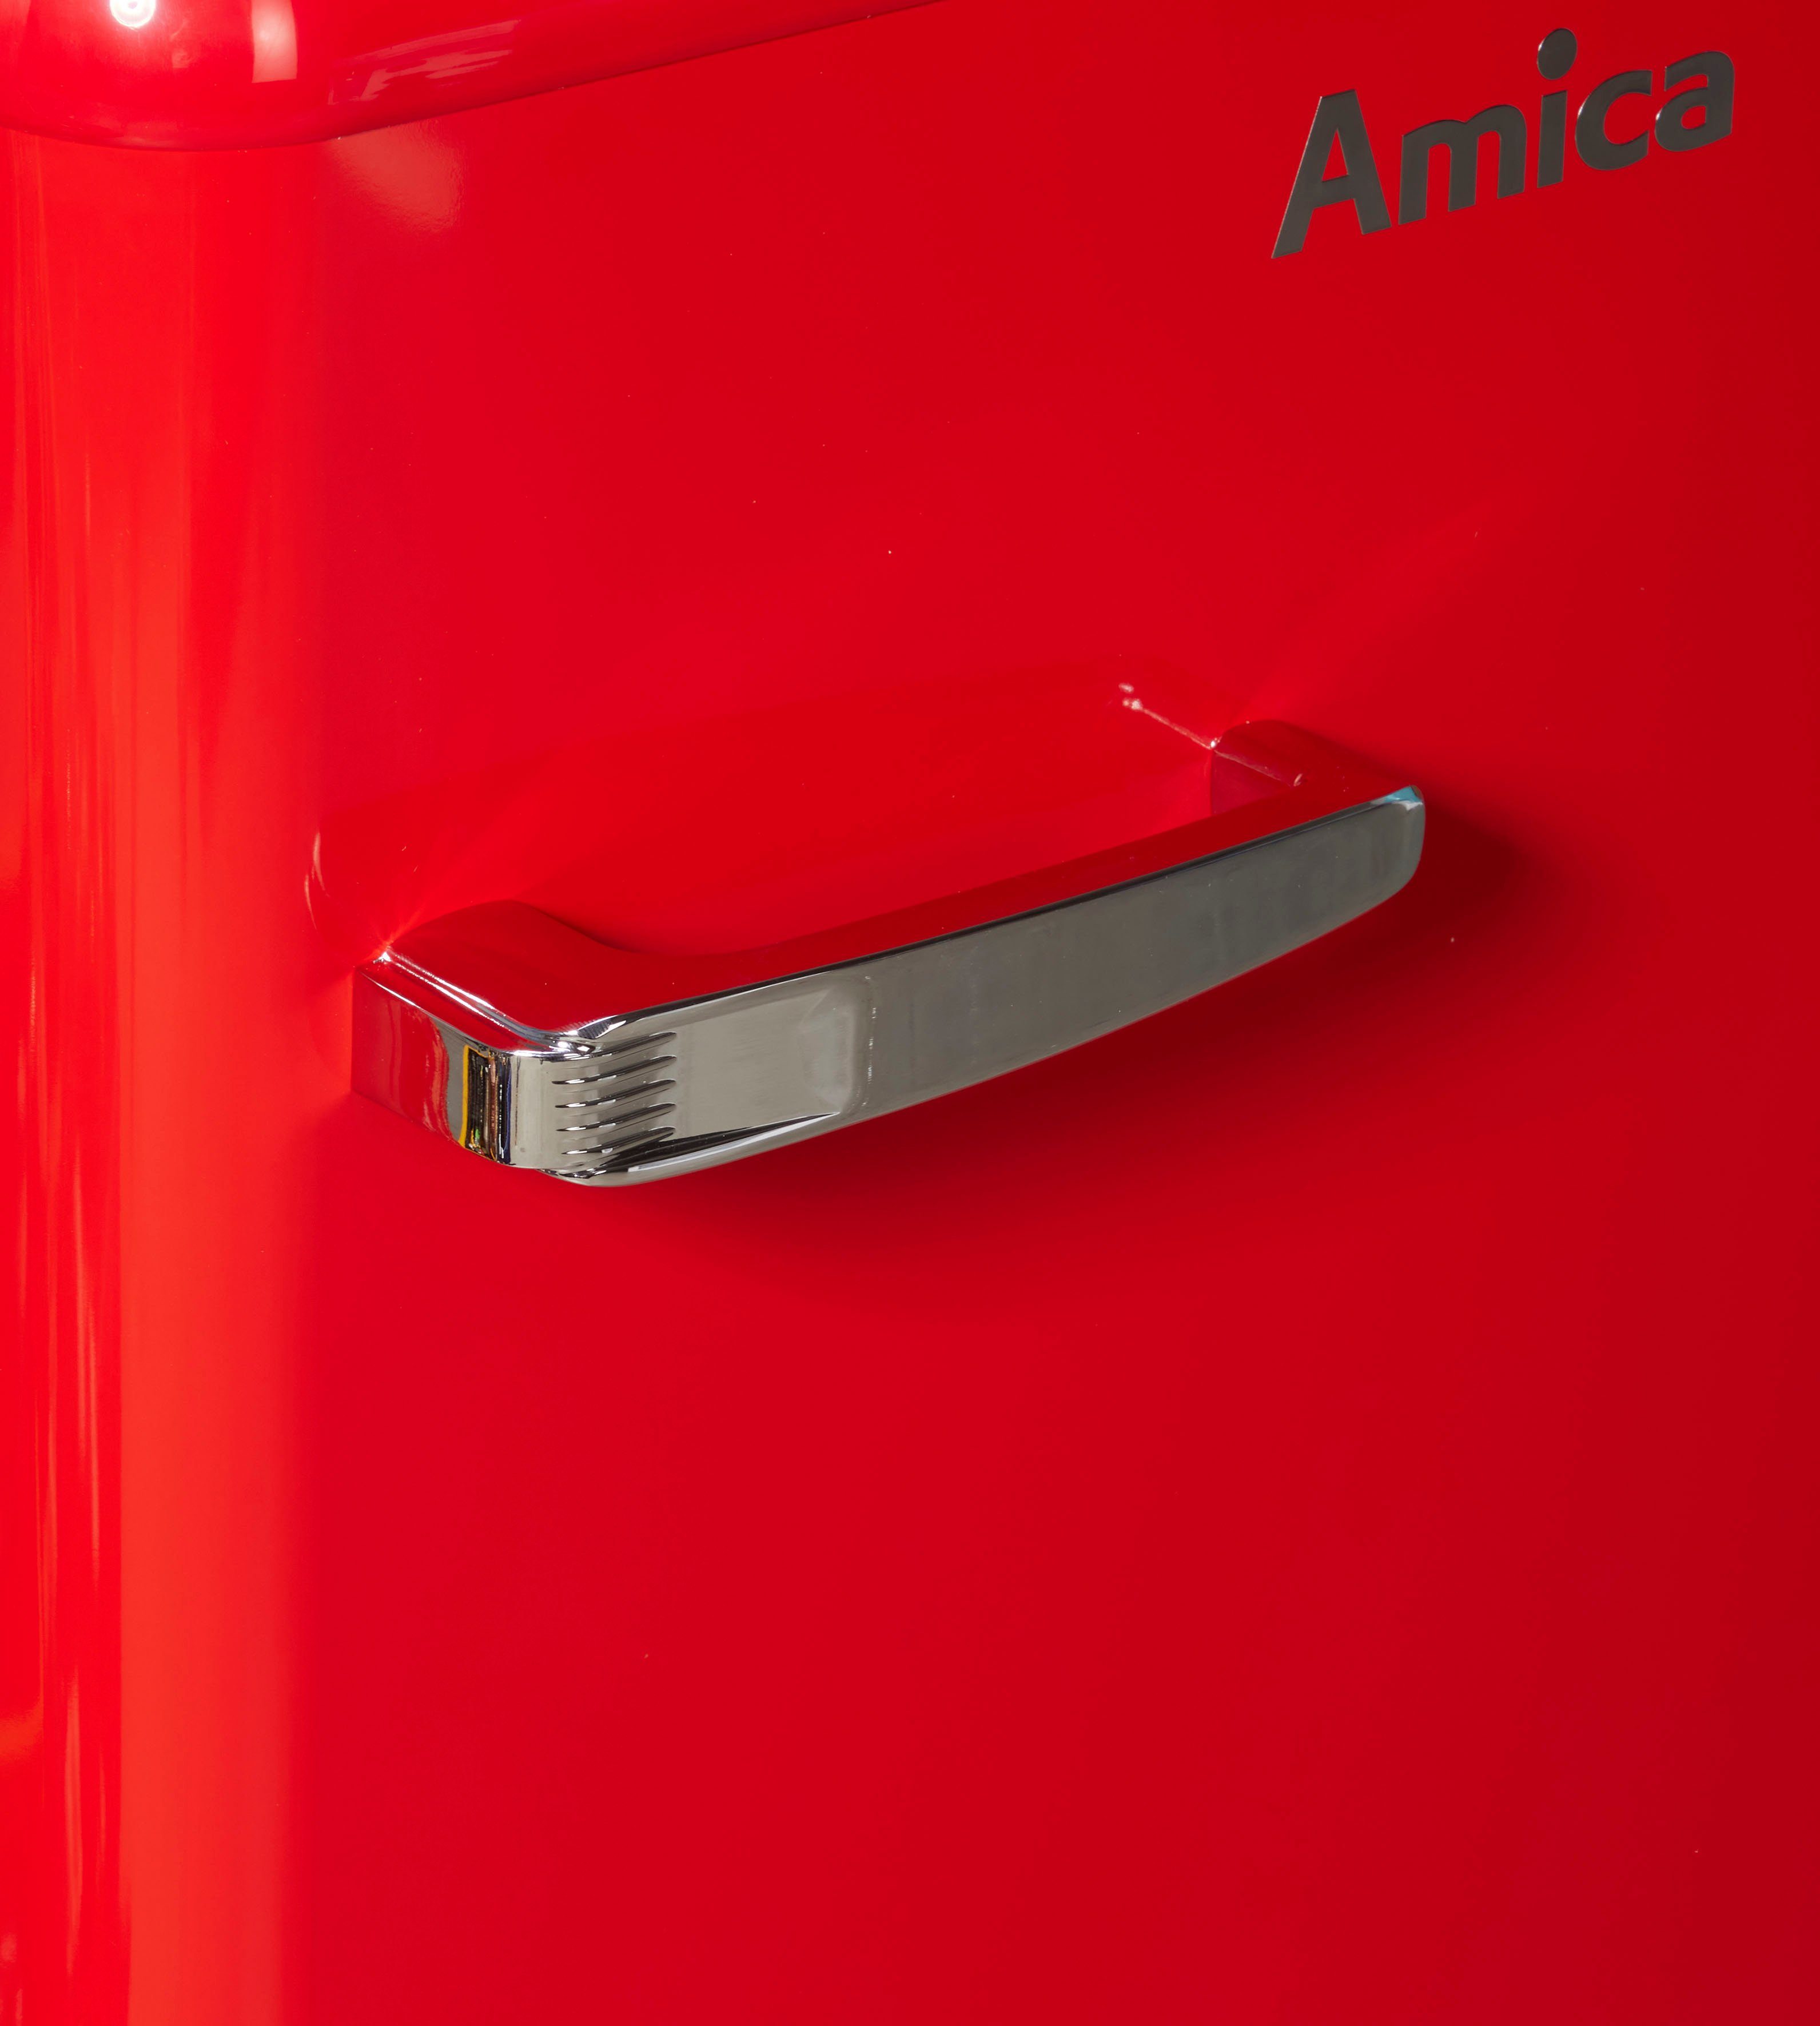 Amica Kühlschrank KSR hoch, R, rot 87,5 160 cm breit 361 cm 55